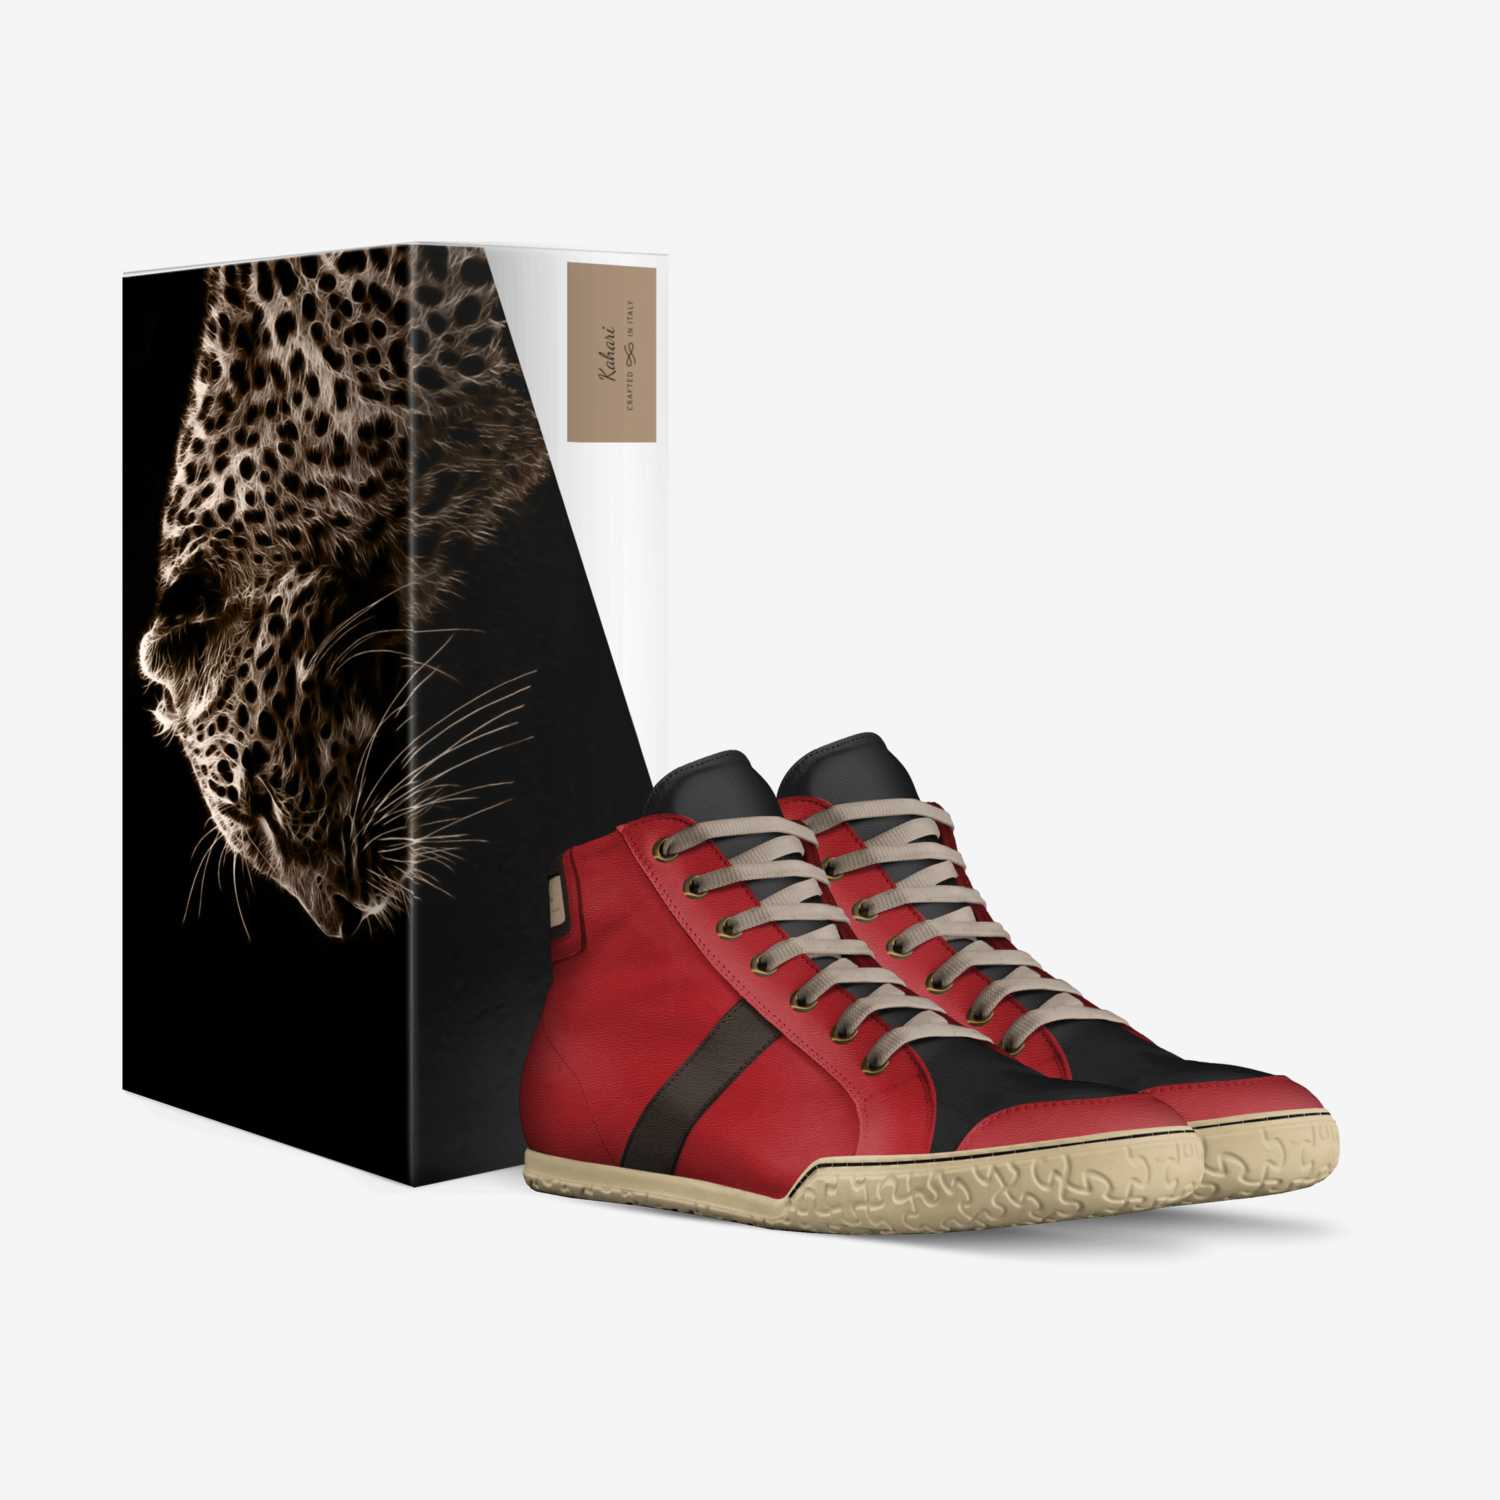 Kahari custom made in Italy shoes by Rashieka Mcgee | Box view